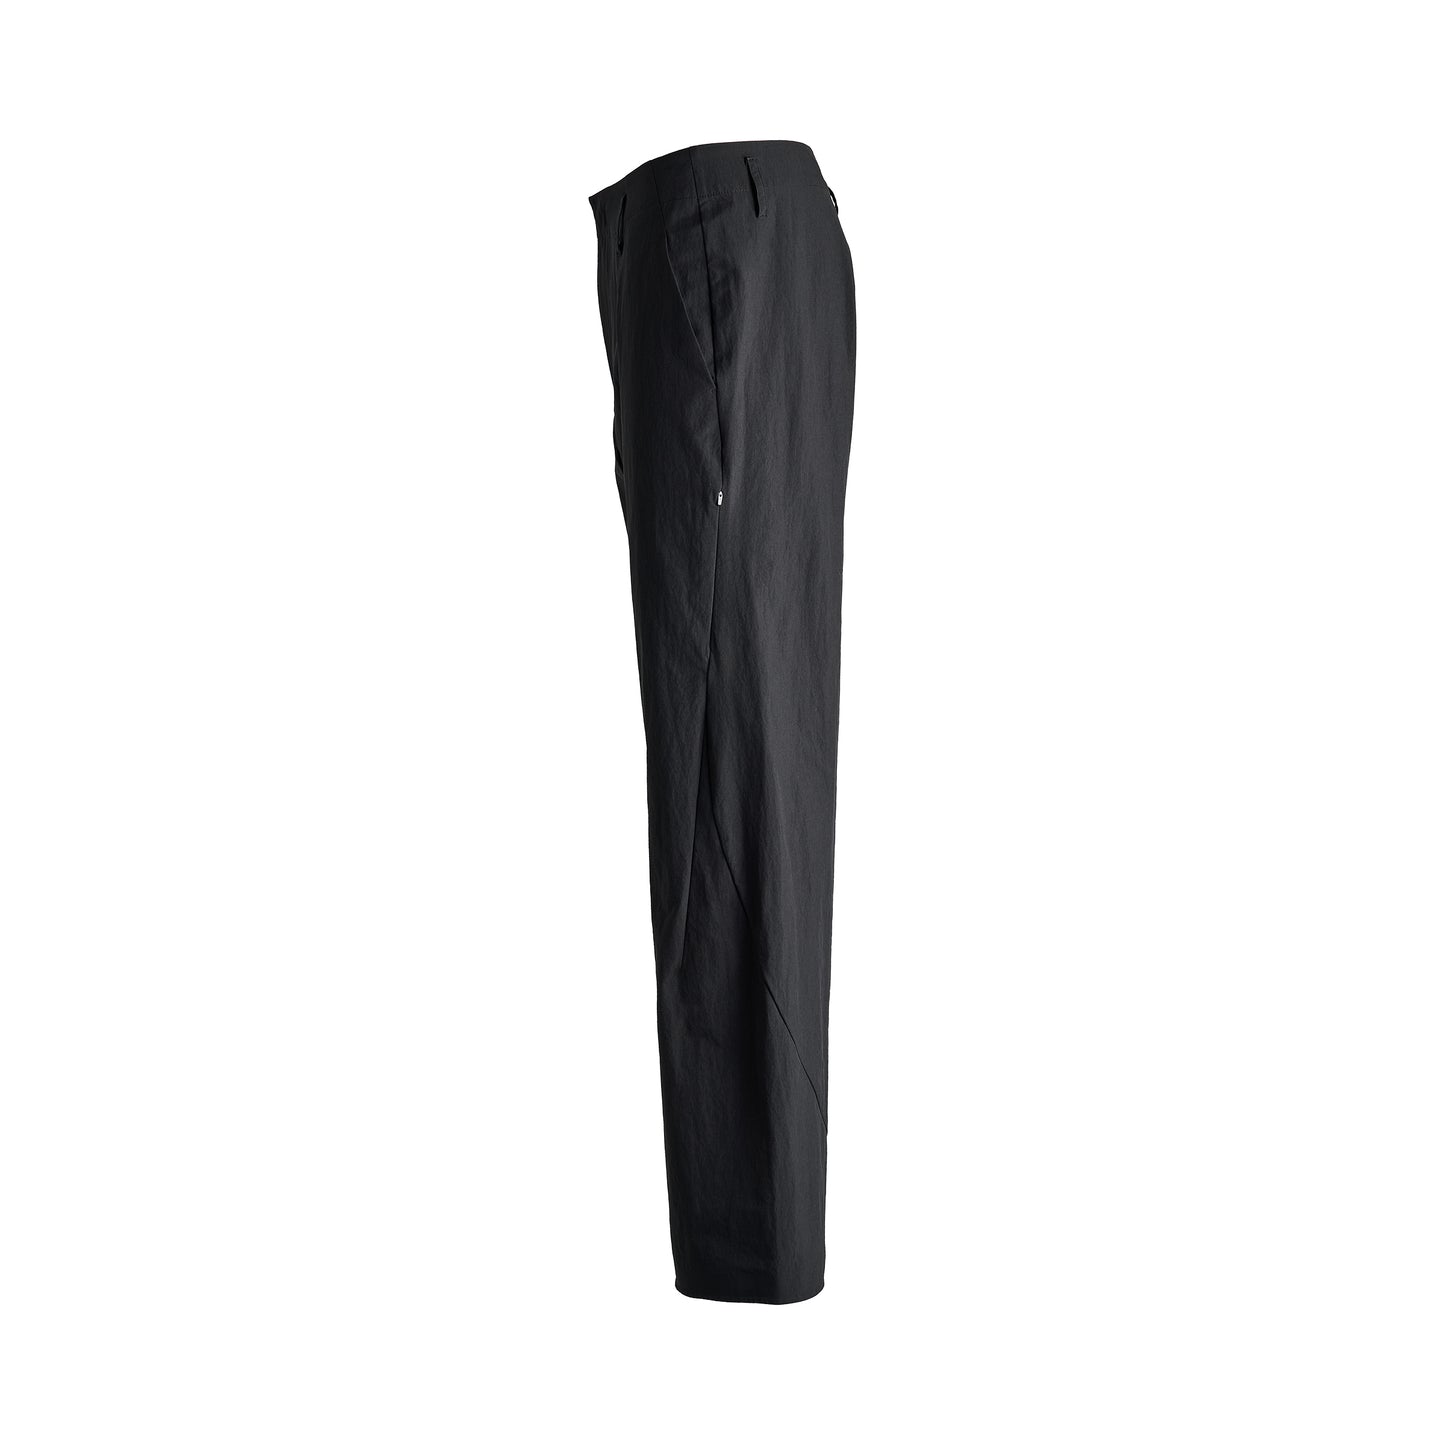 6.0 Trouser (Right) in Black